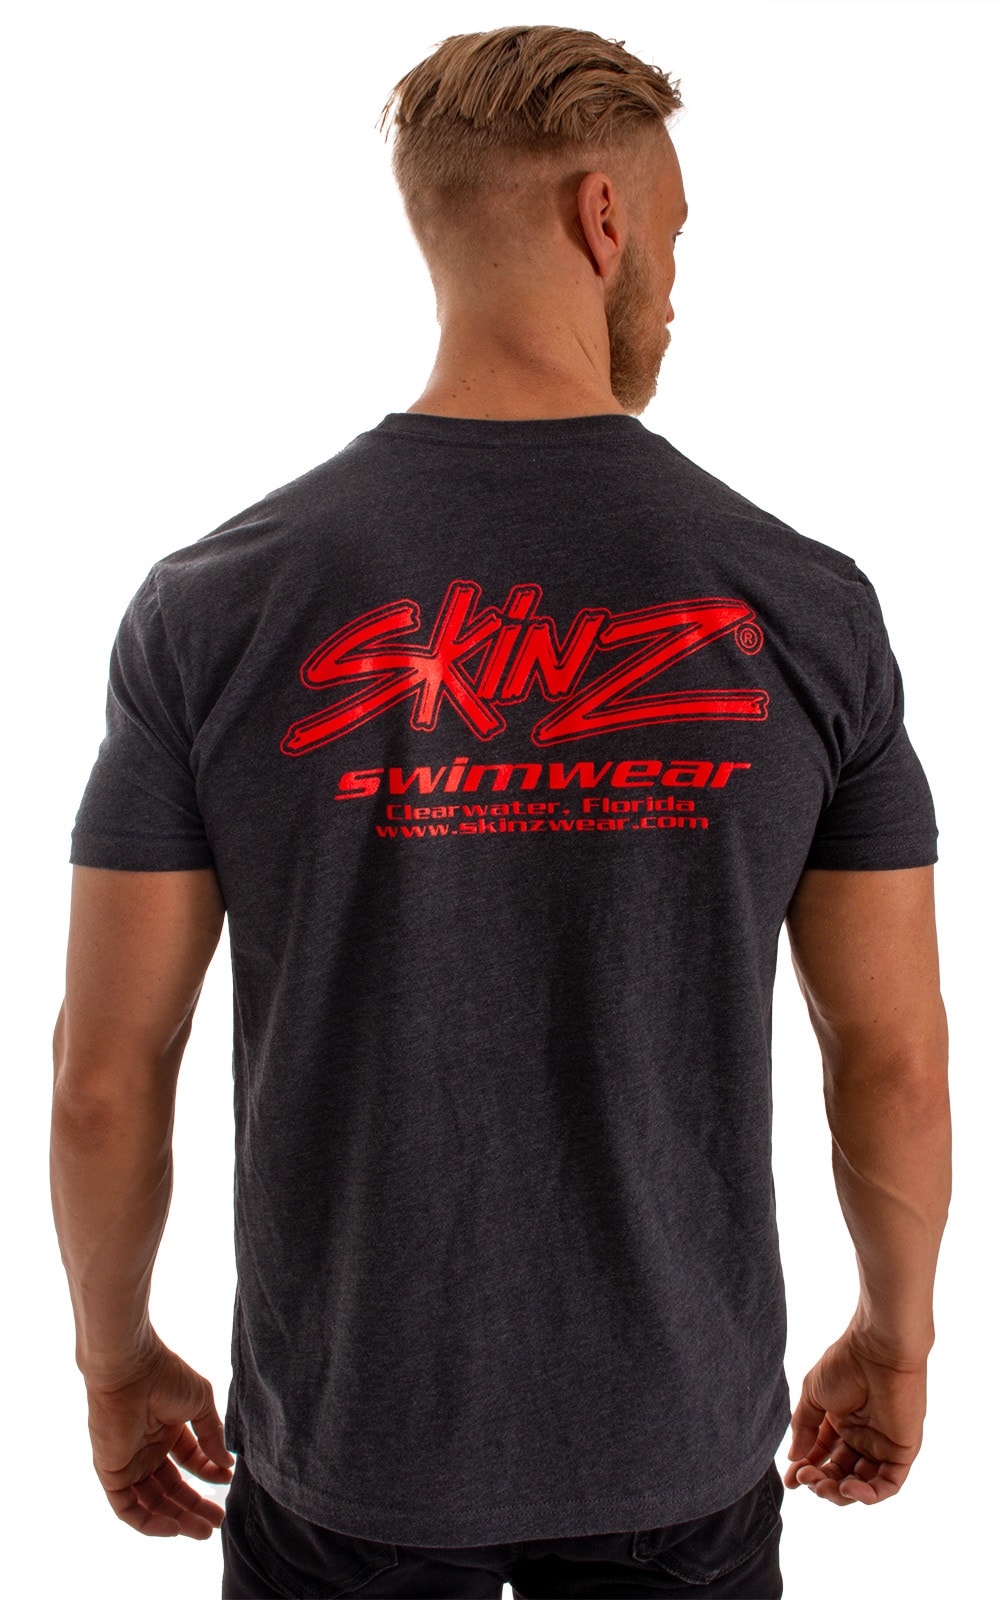 SKINZ  Red Logo on Charcoal Heather Tee Shirt, Rear Alternative